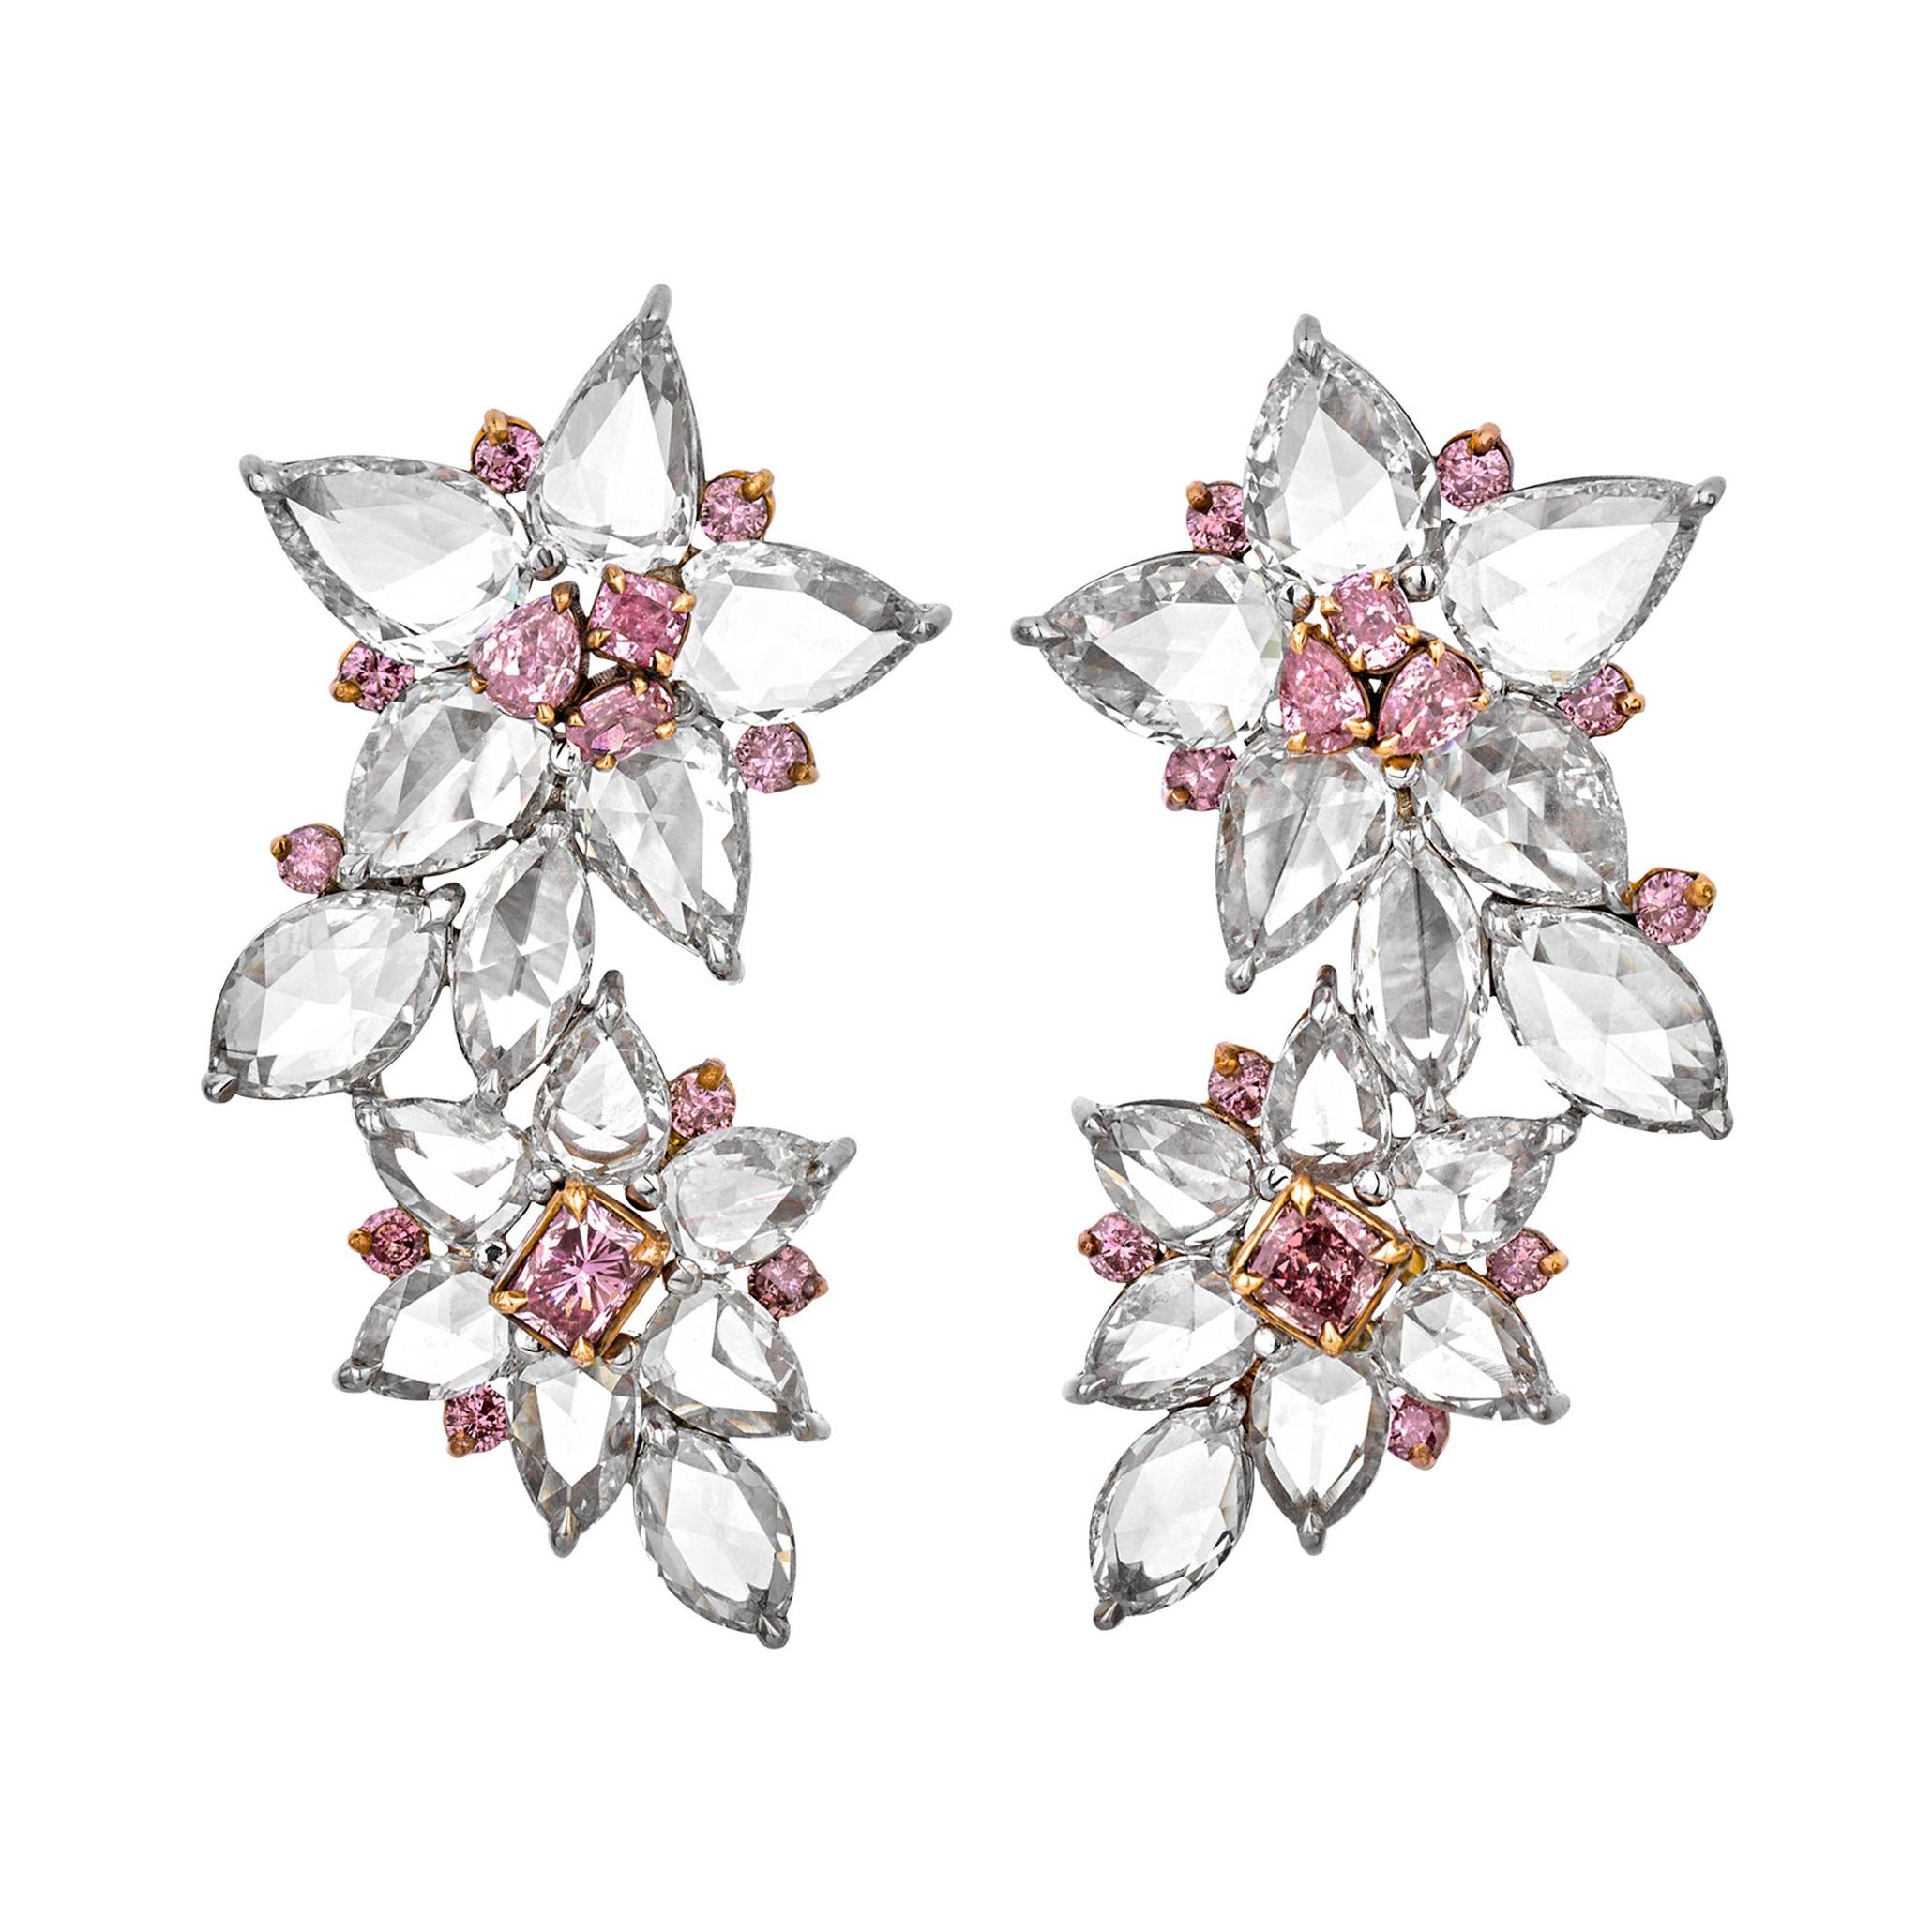 Fancy Pink and White Diamond Earrings